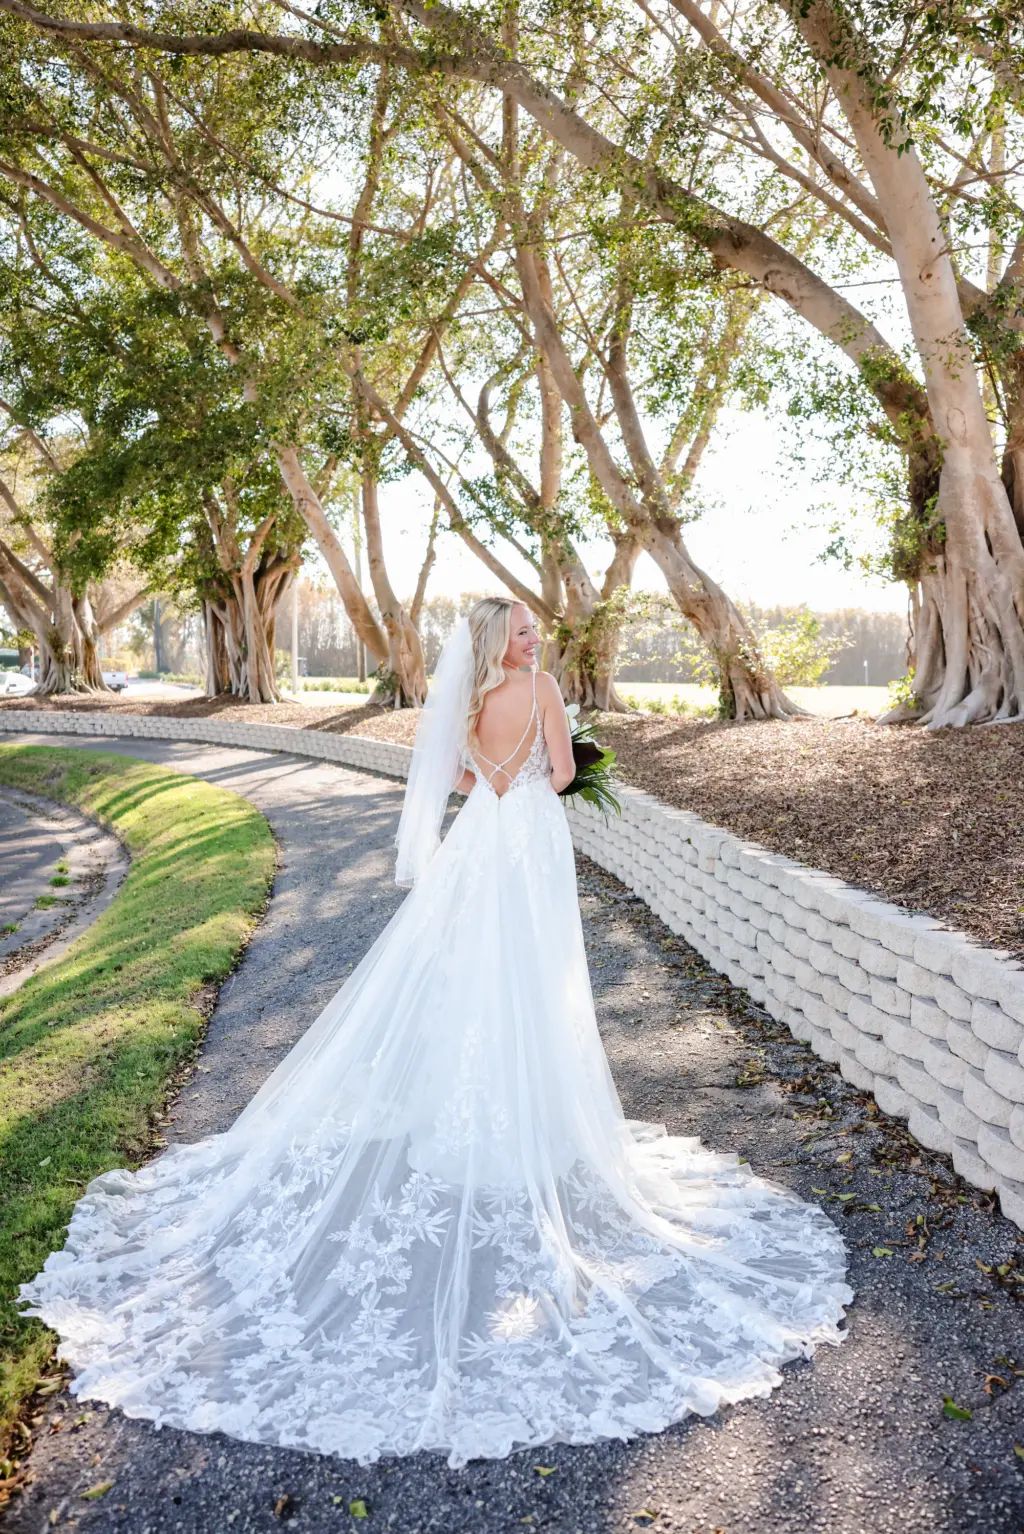 White Spaghetti Strap Lace A-line Wedding Dress with Fingertip Length Veil Inspiration | St Pete Photographer Lifelong Photography Studio